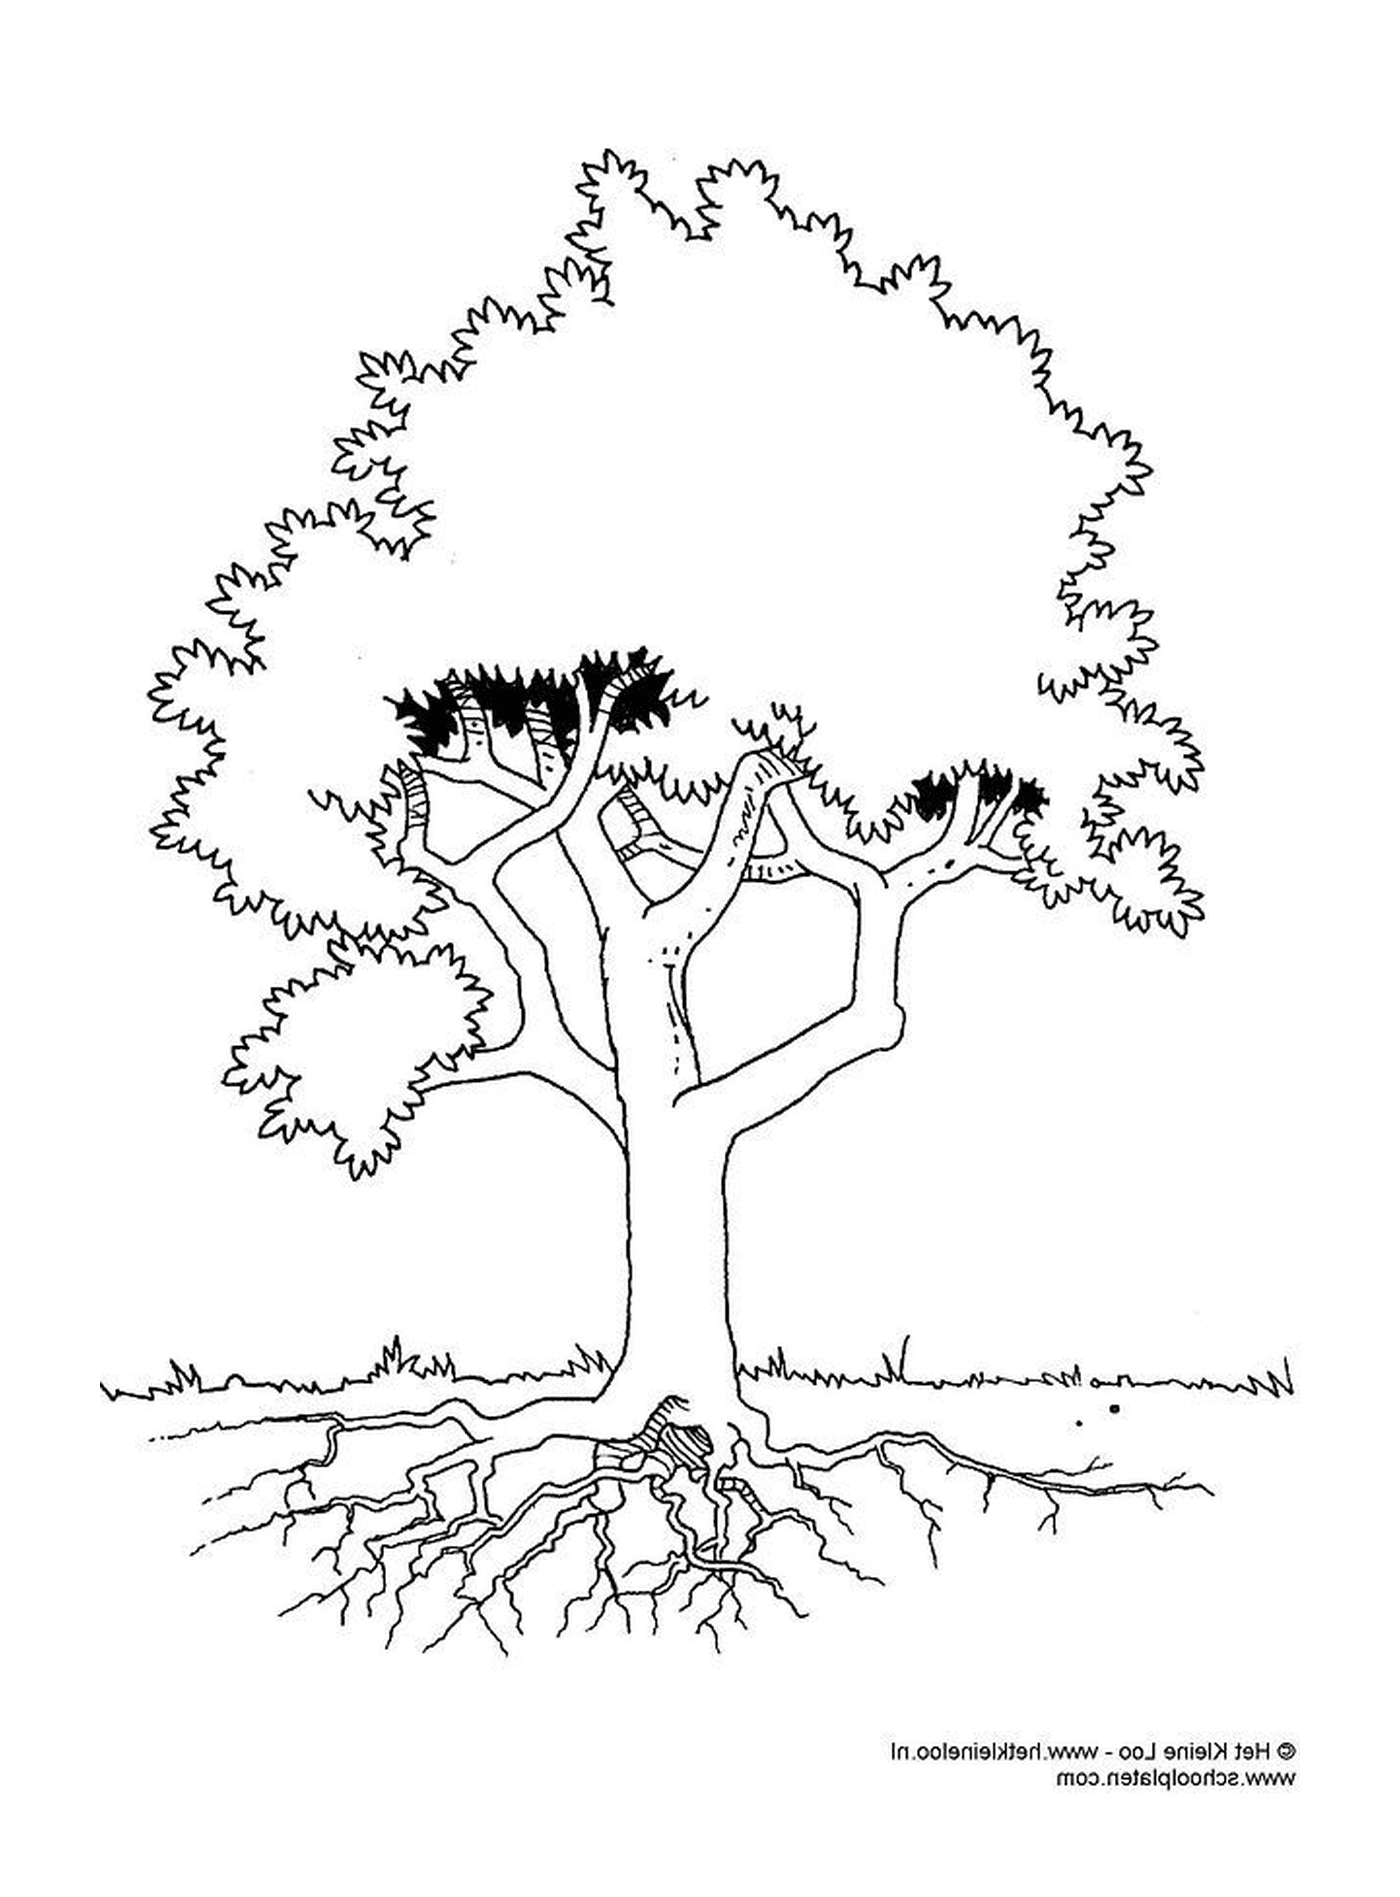   Un arbre avec des racines 